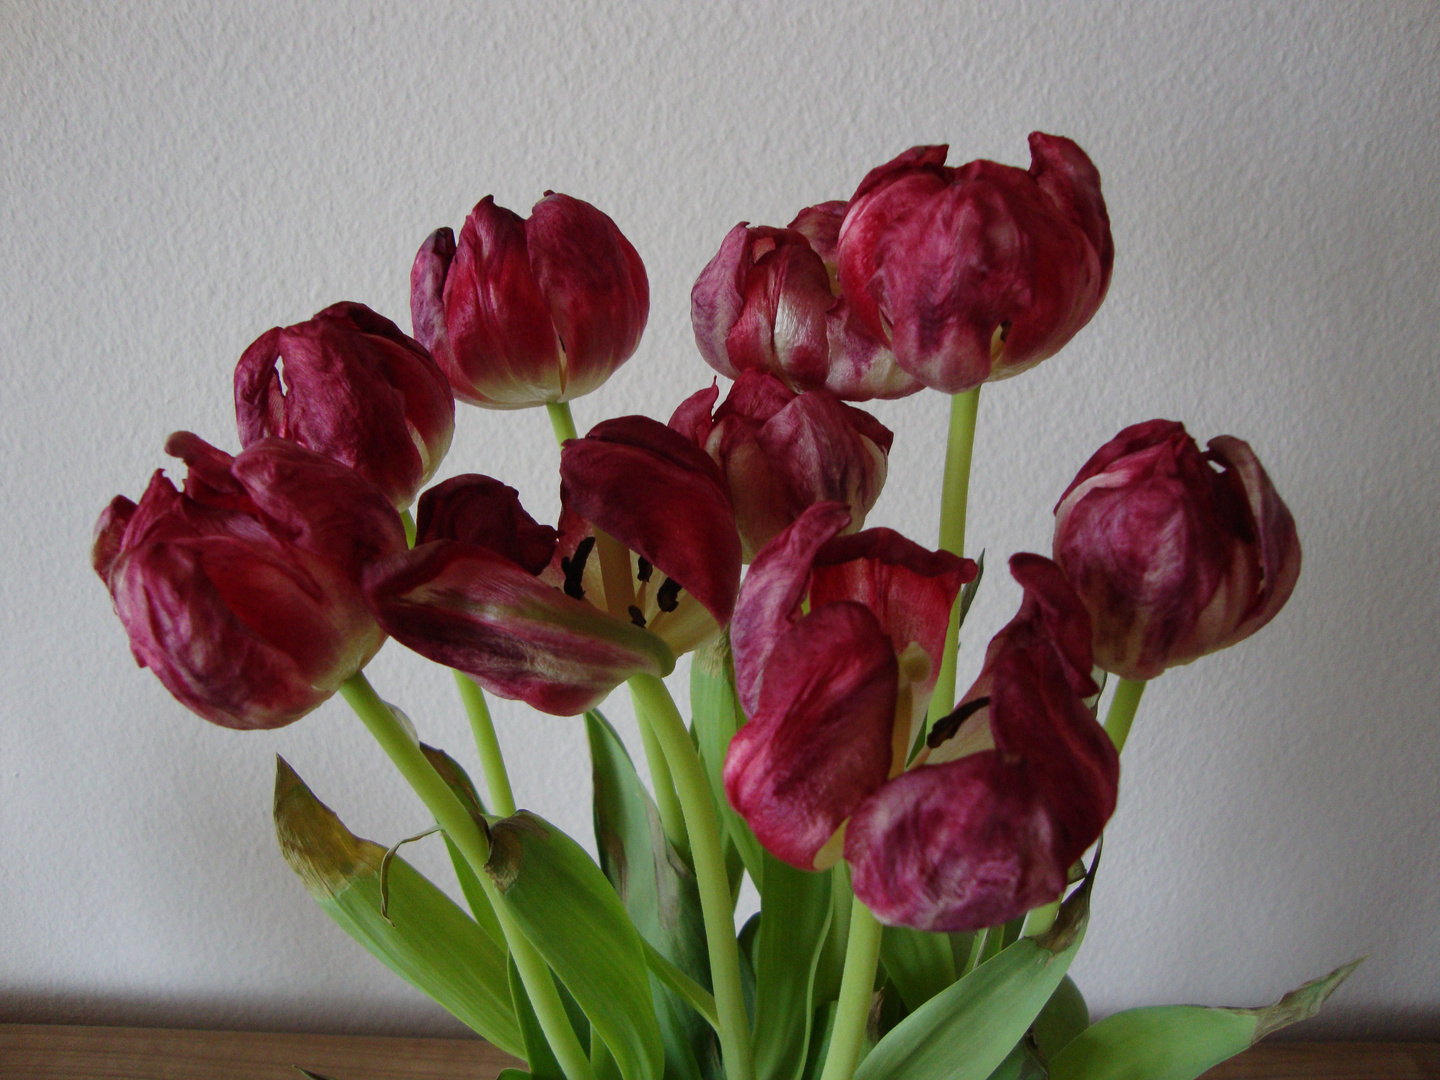 absterbende Tulpen